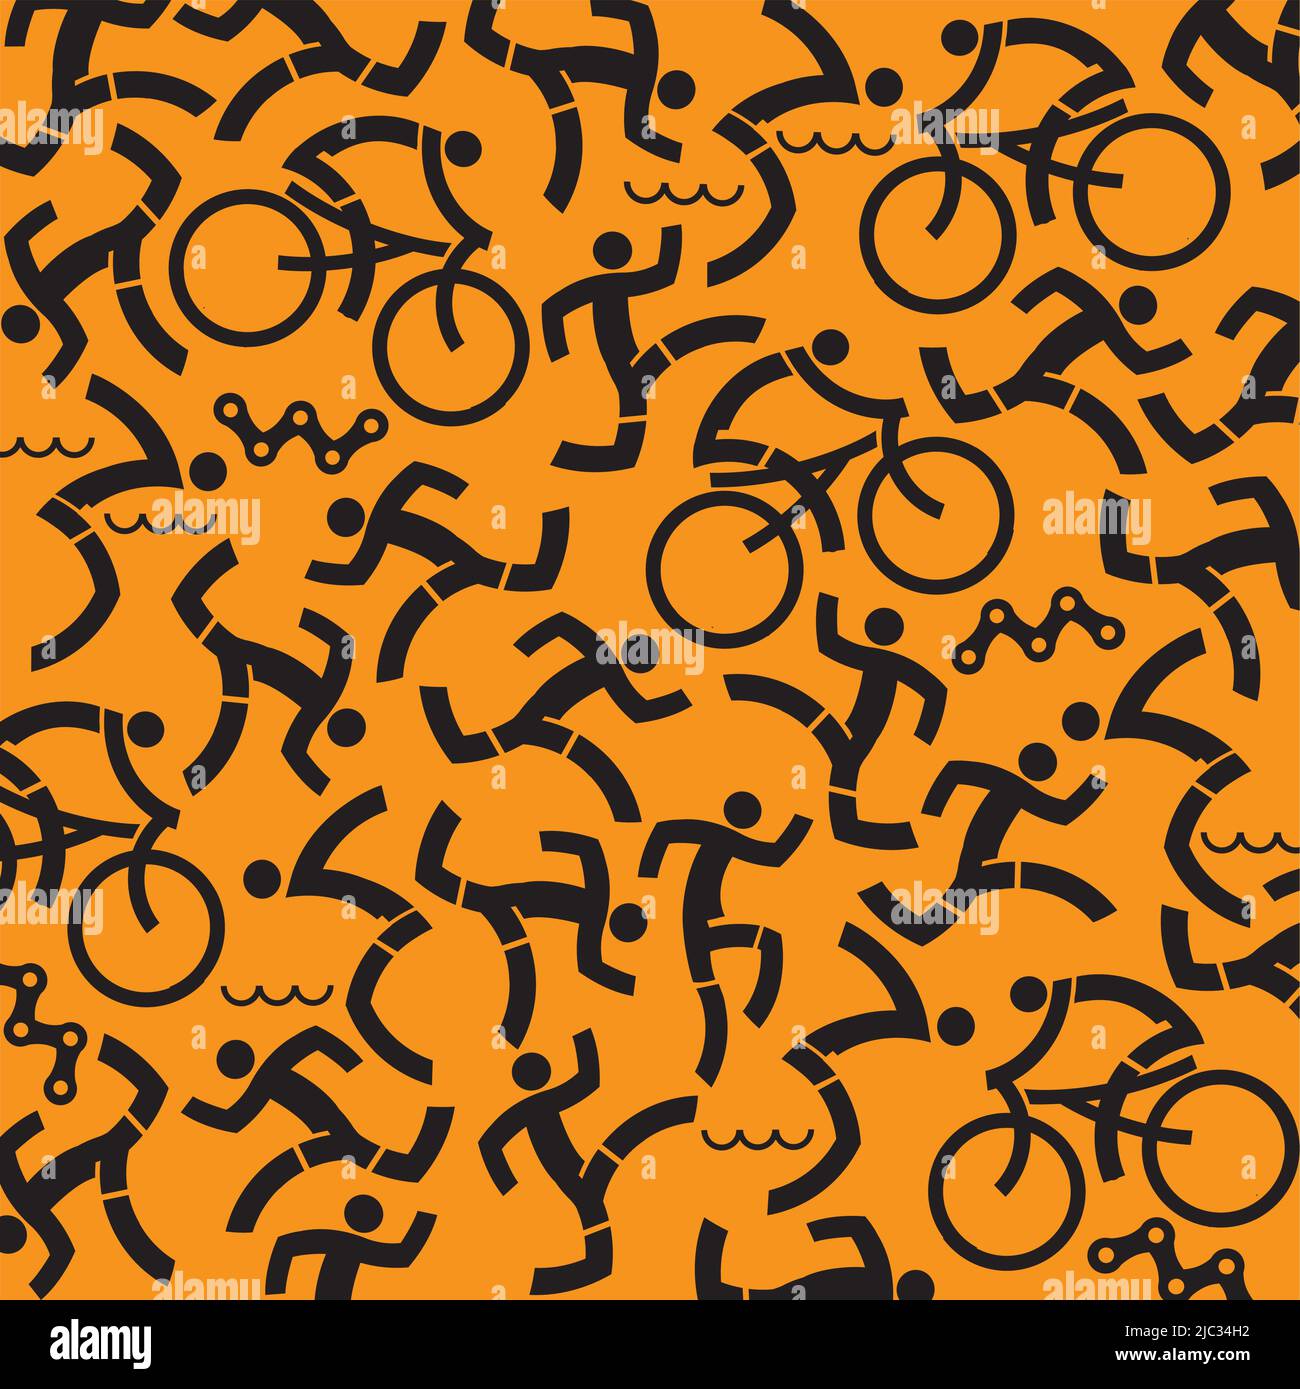 Triathlon-Symbole Hintergrund. Orangefarbener Hintergrund mit schwarzen Symbolen von Triathlon-Athleten. Vektor verfügbar. Stock Vektor